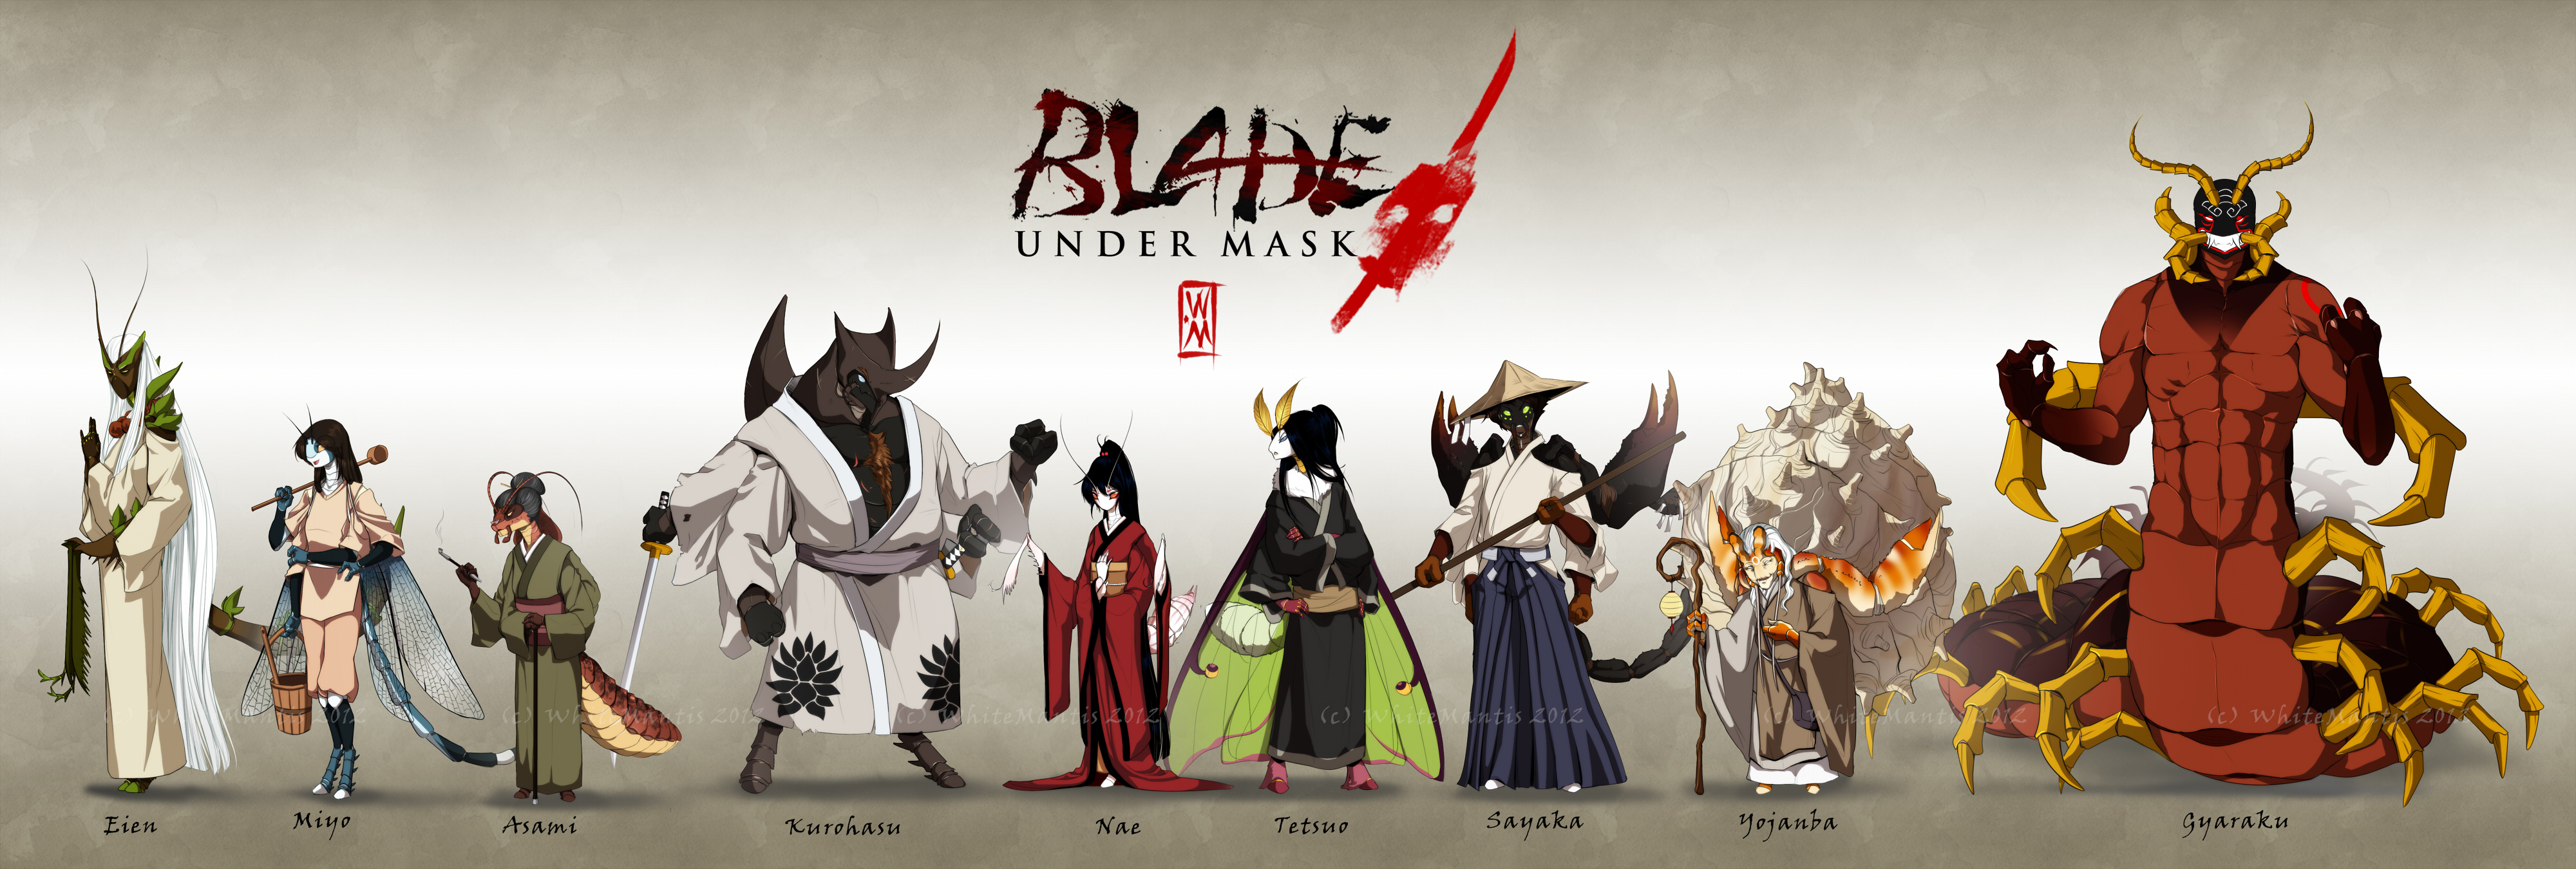 blade_under_mask__character_lineup_by_white_mantis-d5ki47f.jpg